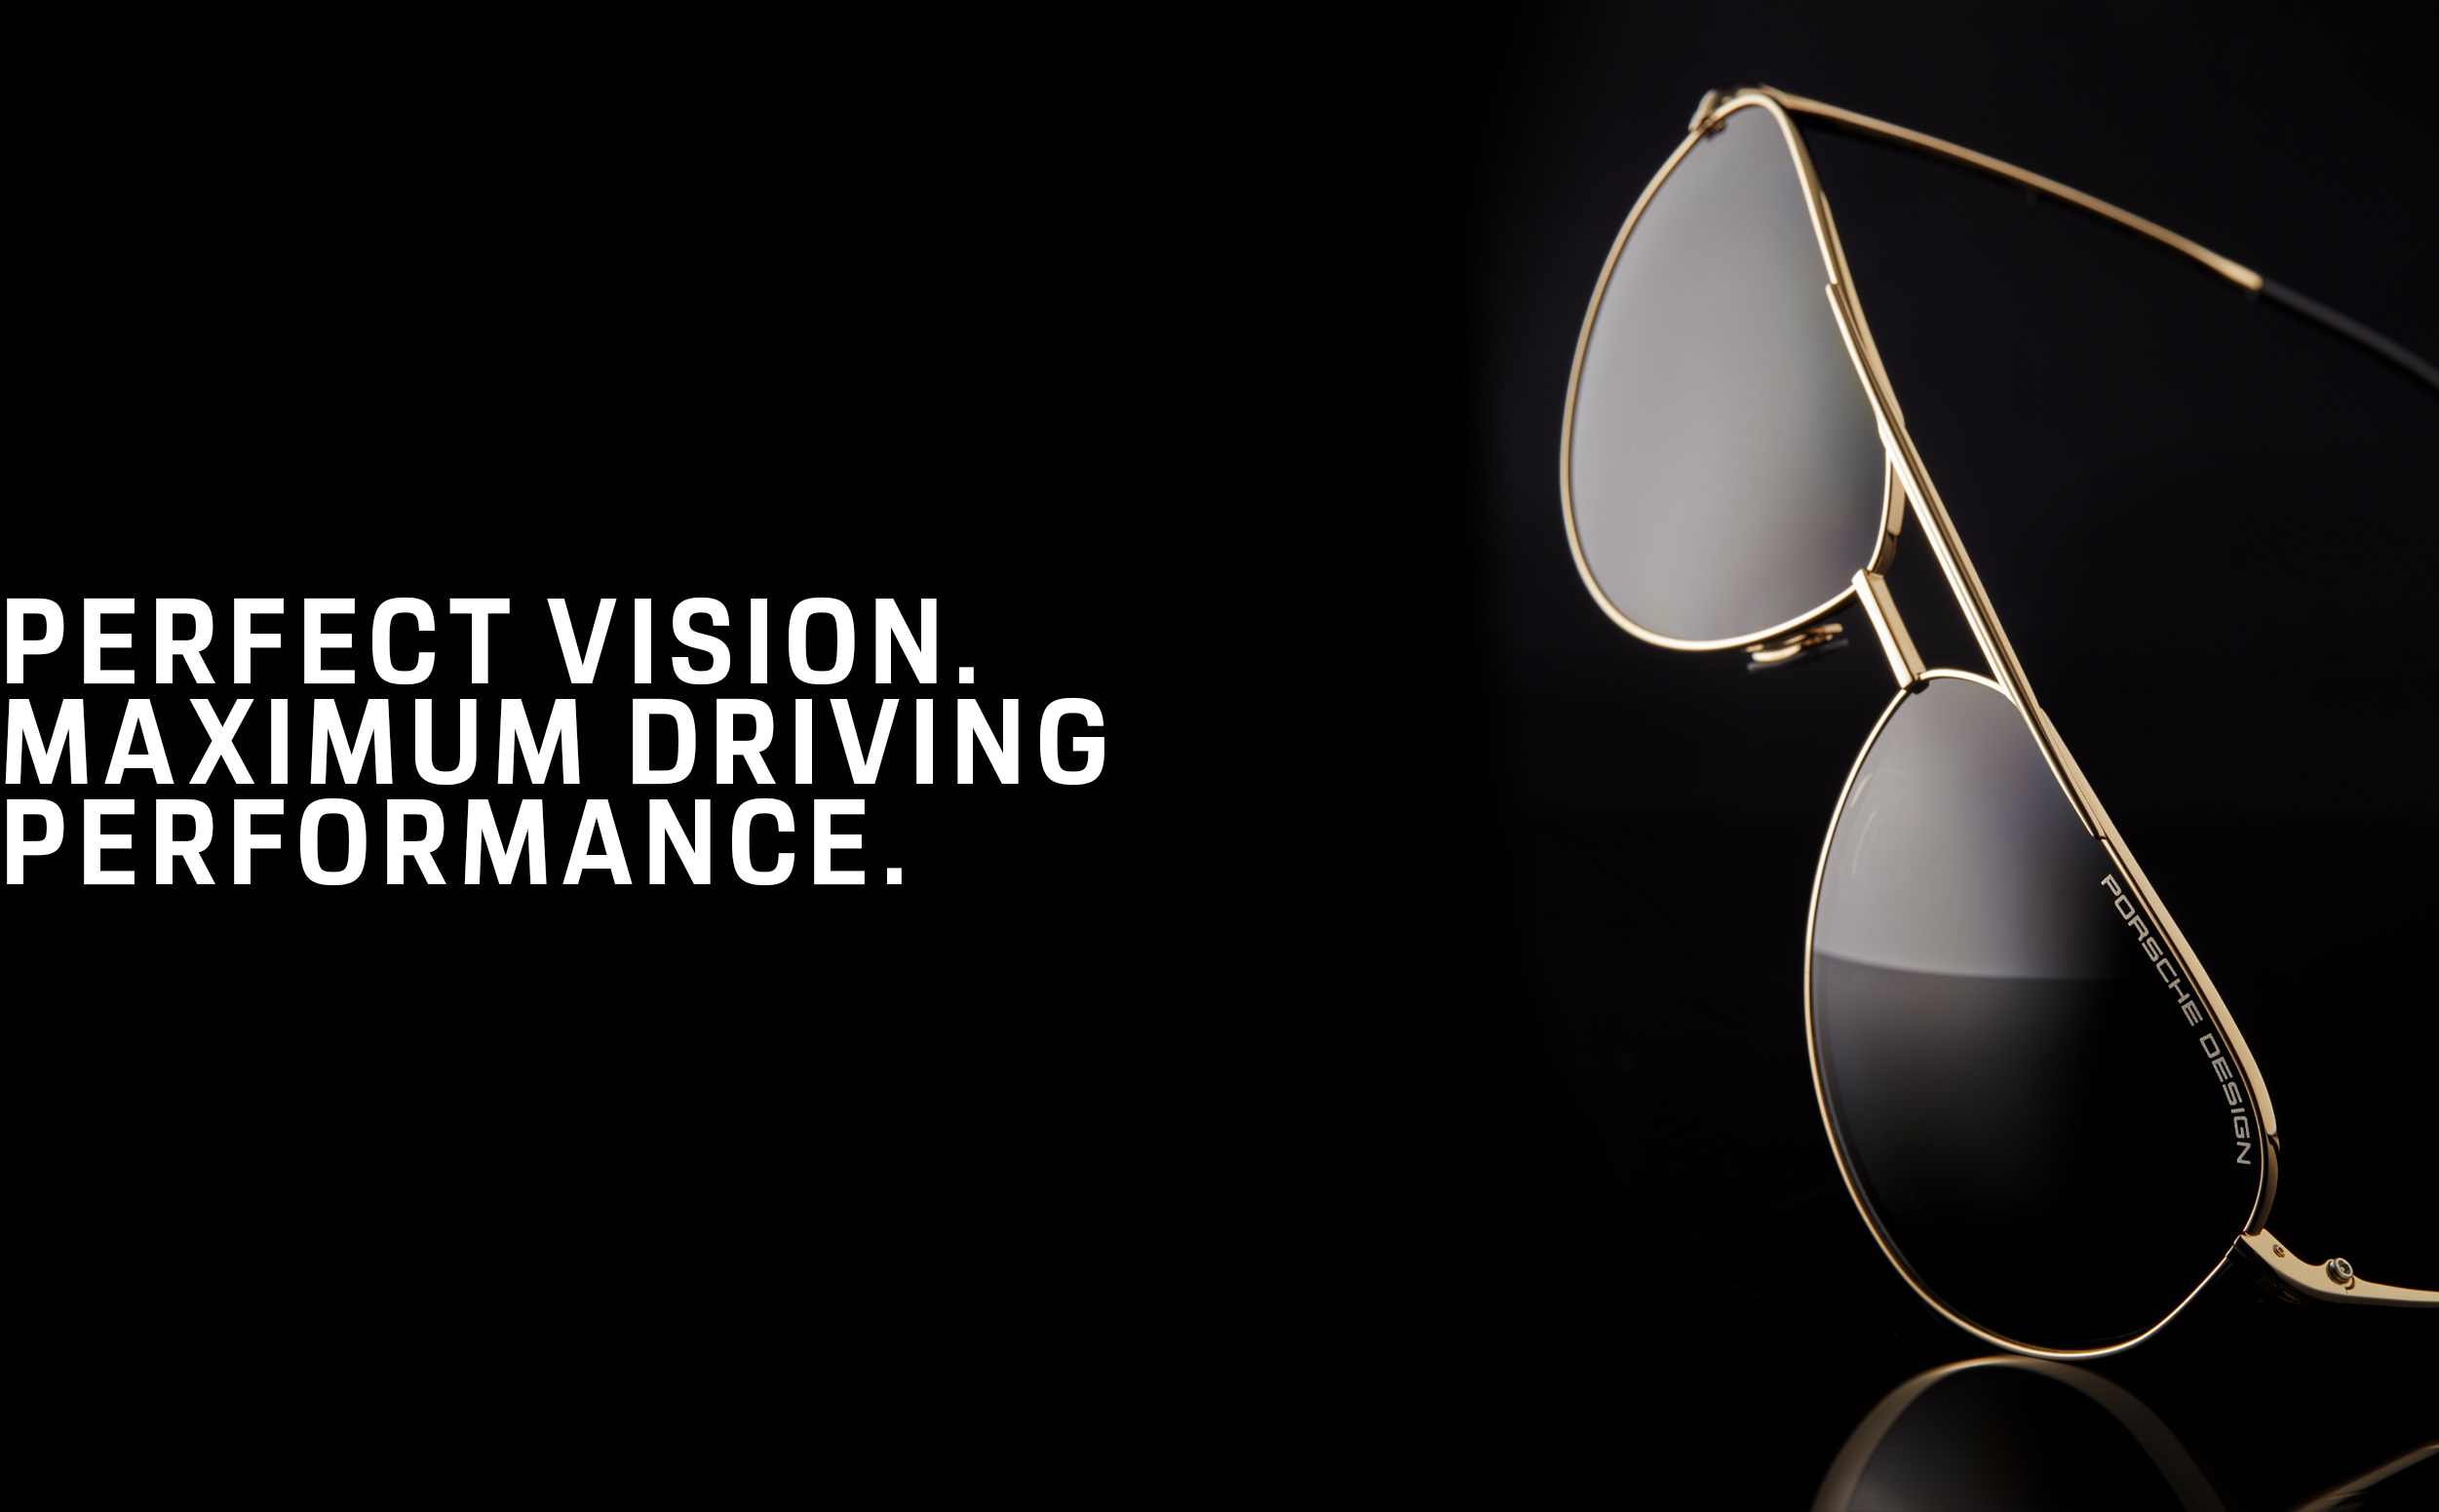 2030-vision-drive-lens-technology-logo-4